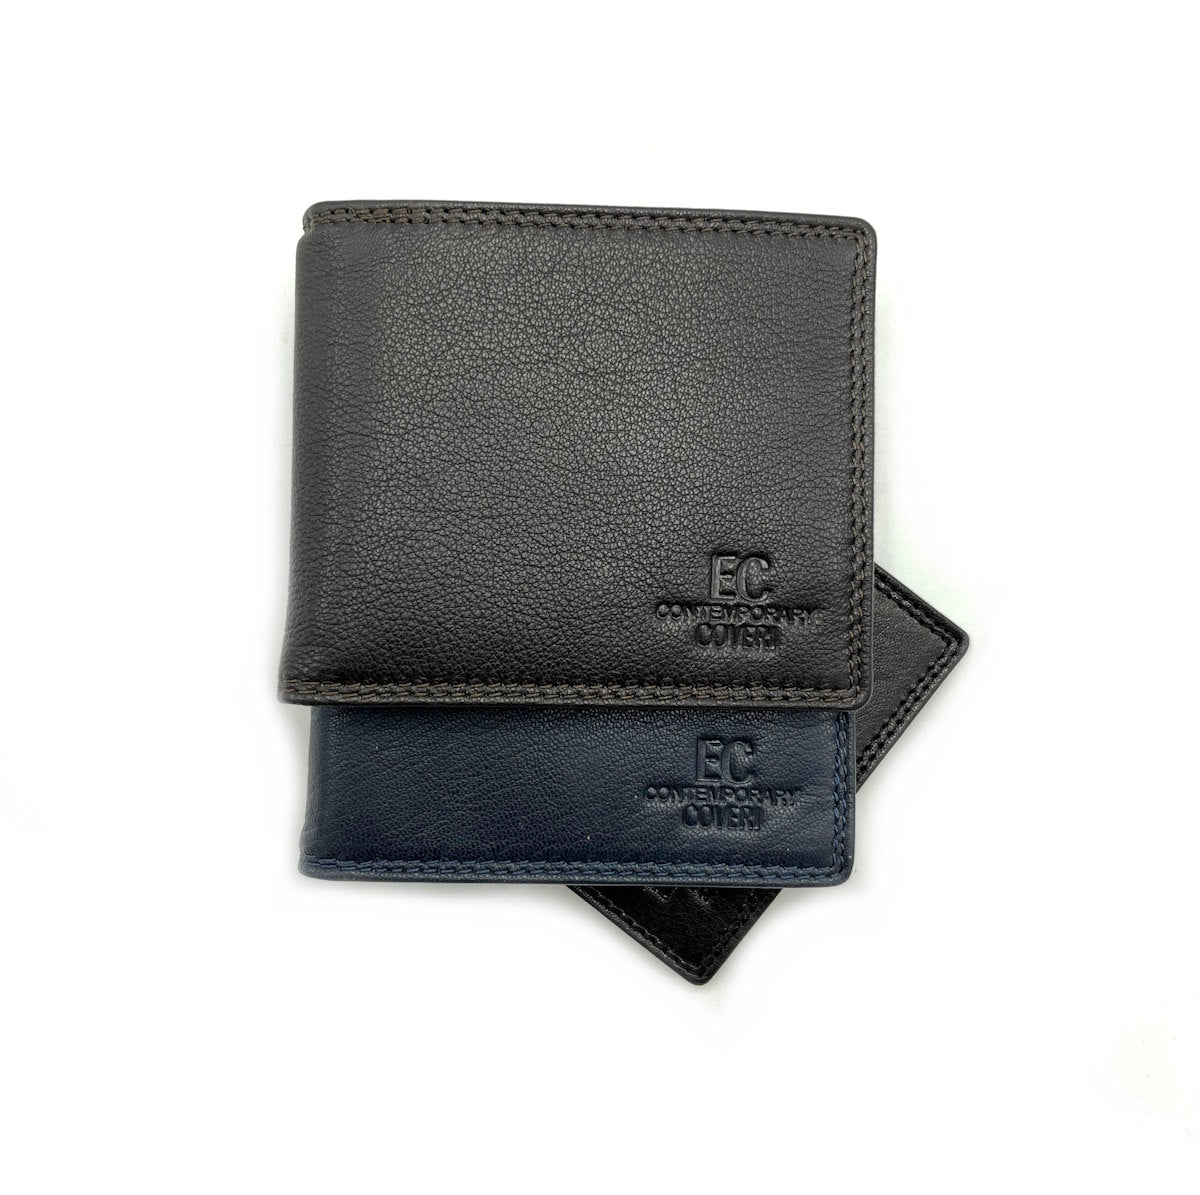 Genuine leather wallet, EC COVERI, art. EC24760-51